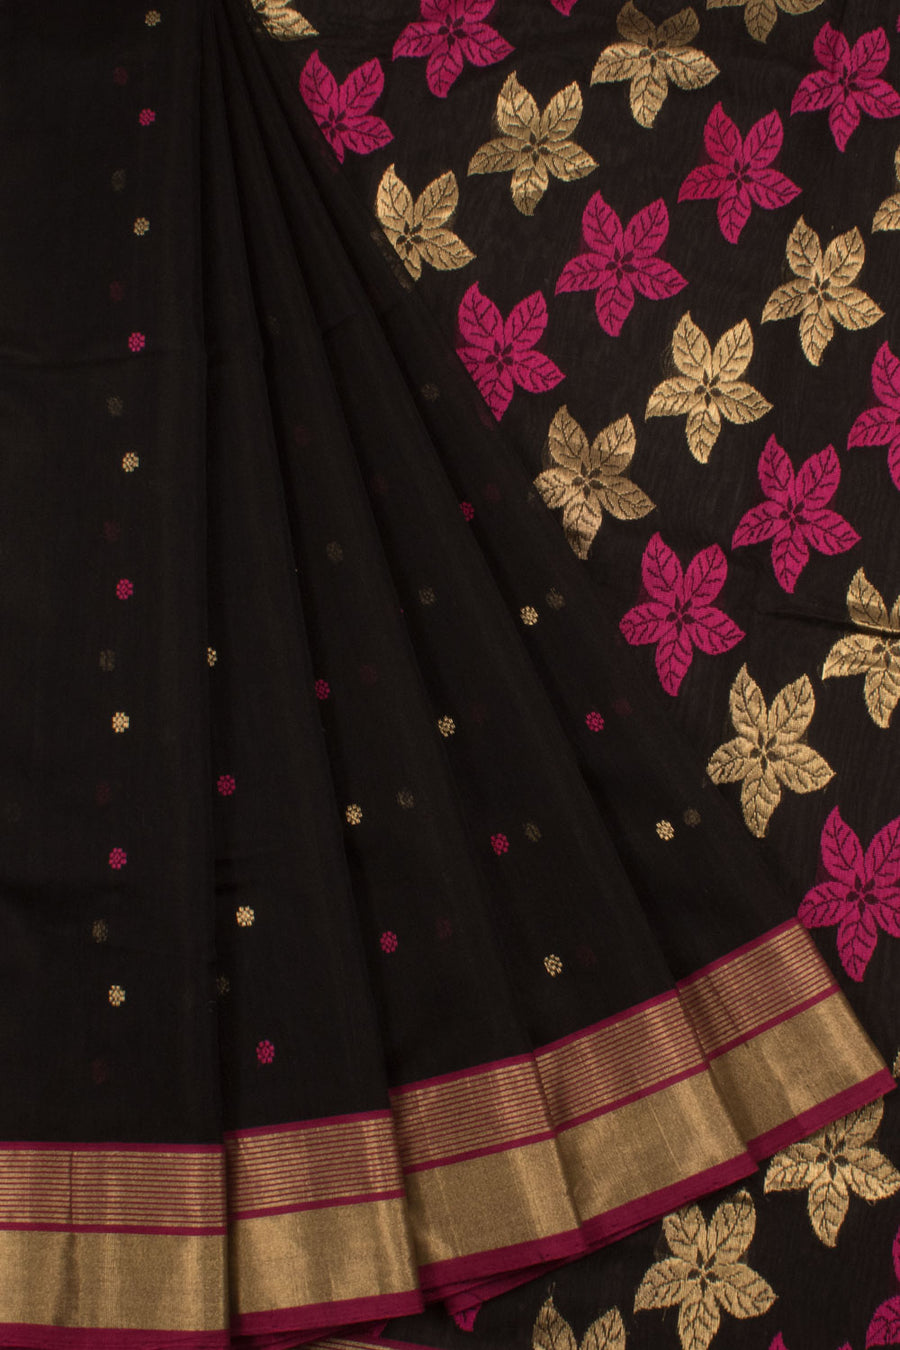 Handloom Chanderi Silk Cotton Saree with Floral Motifs and Zari Border